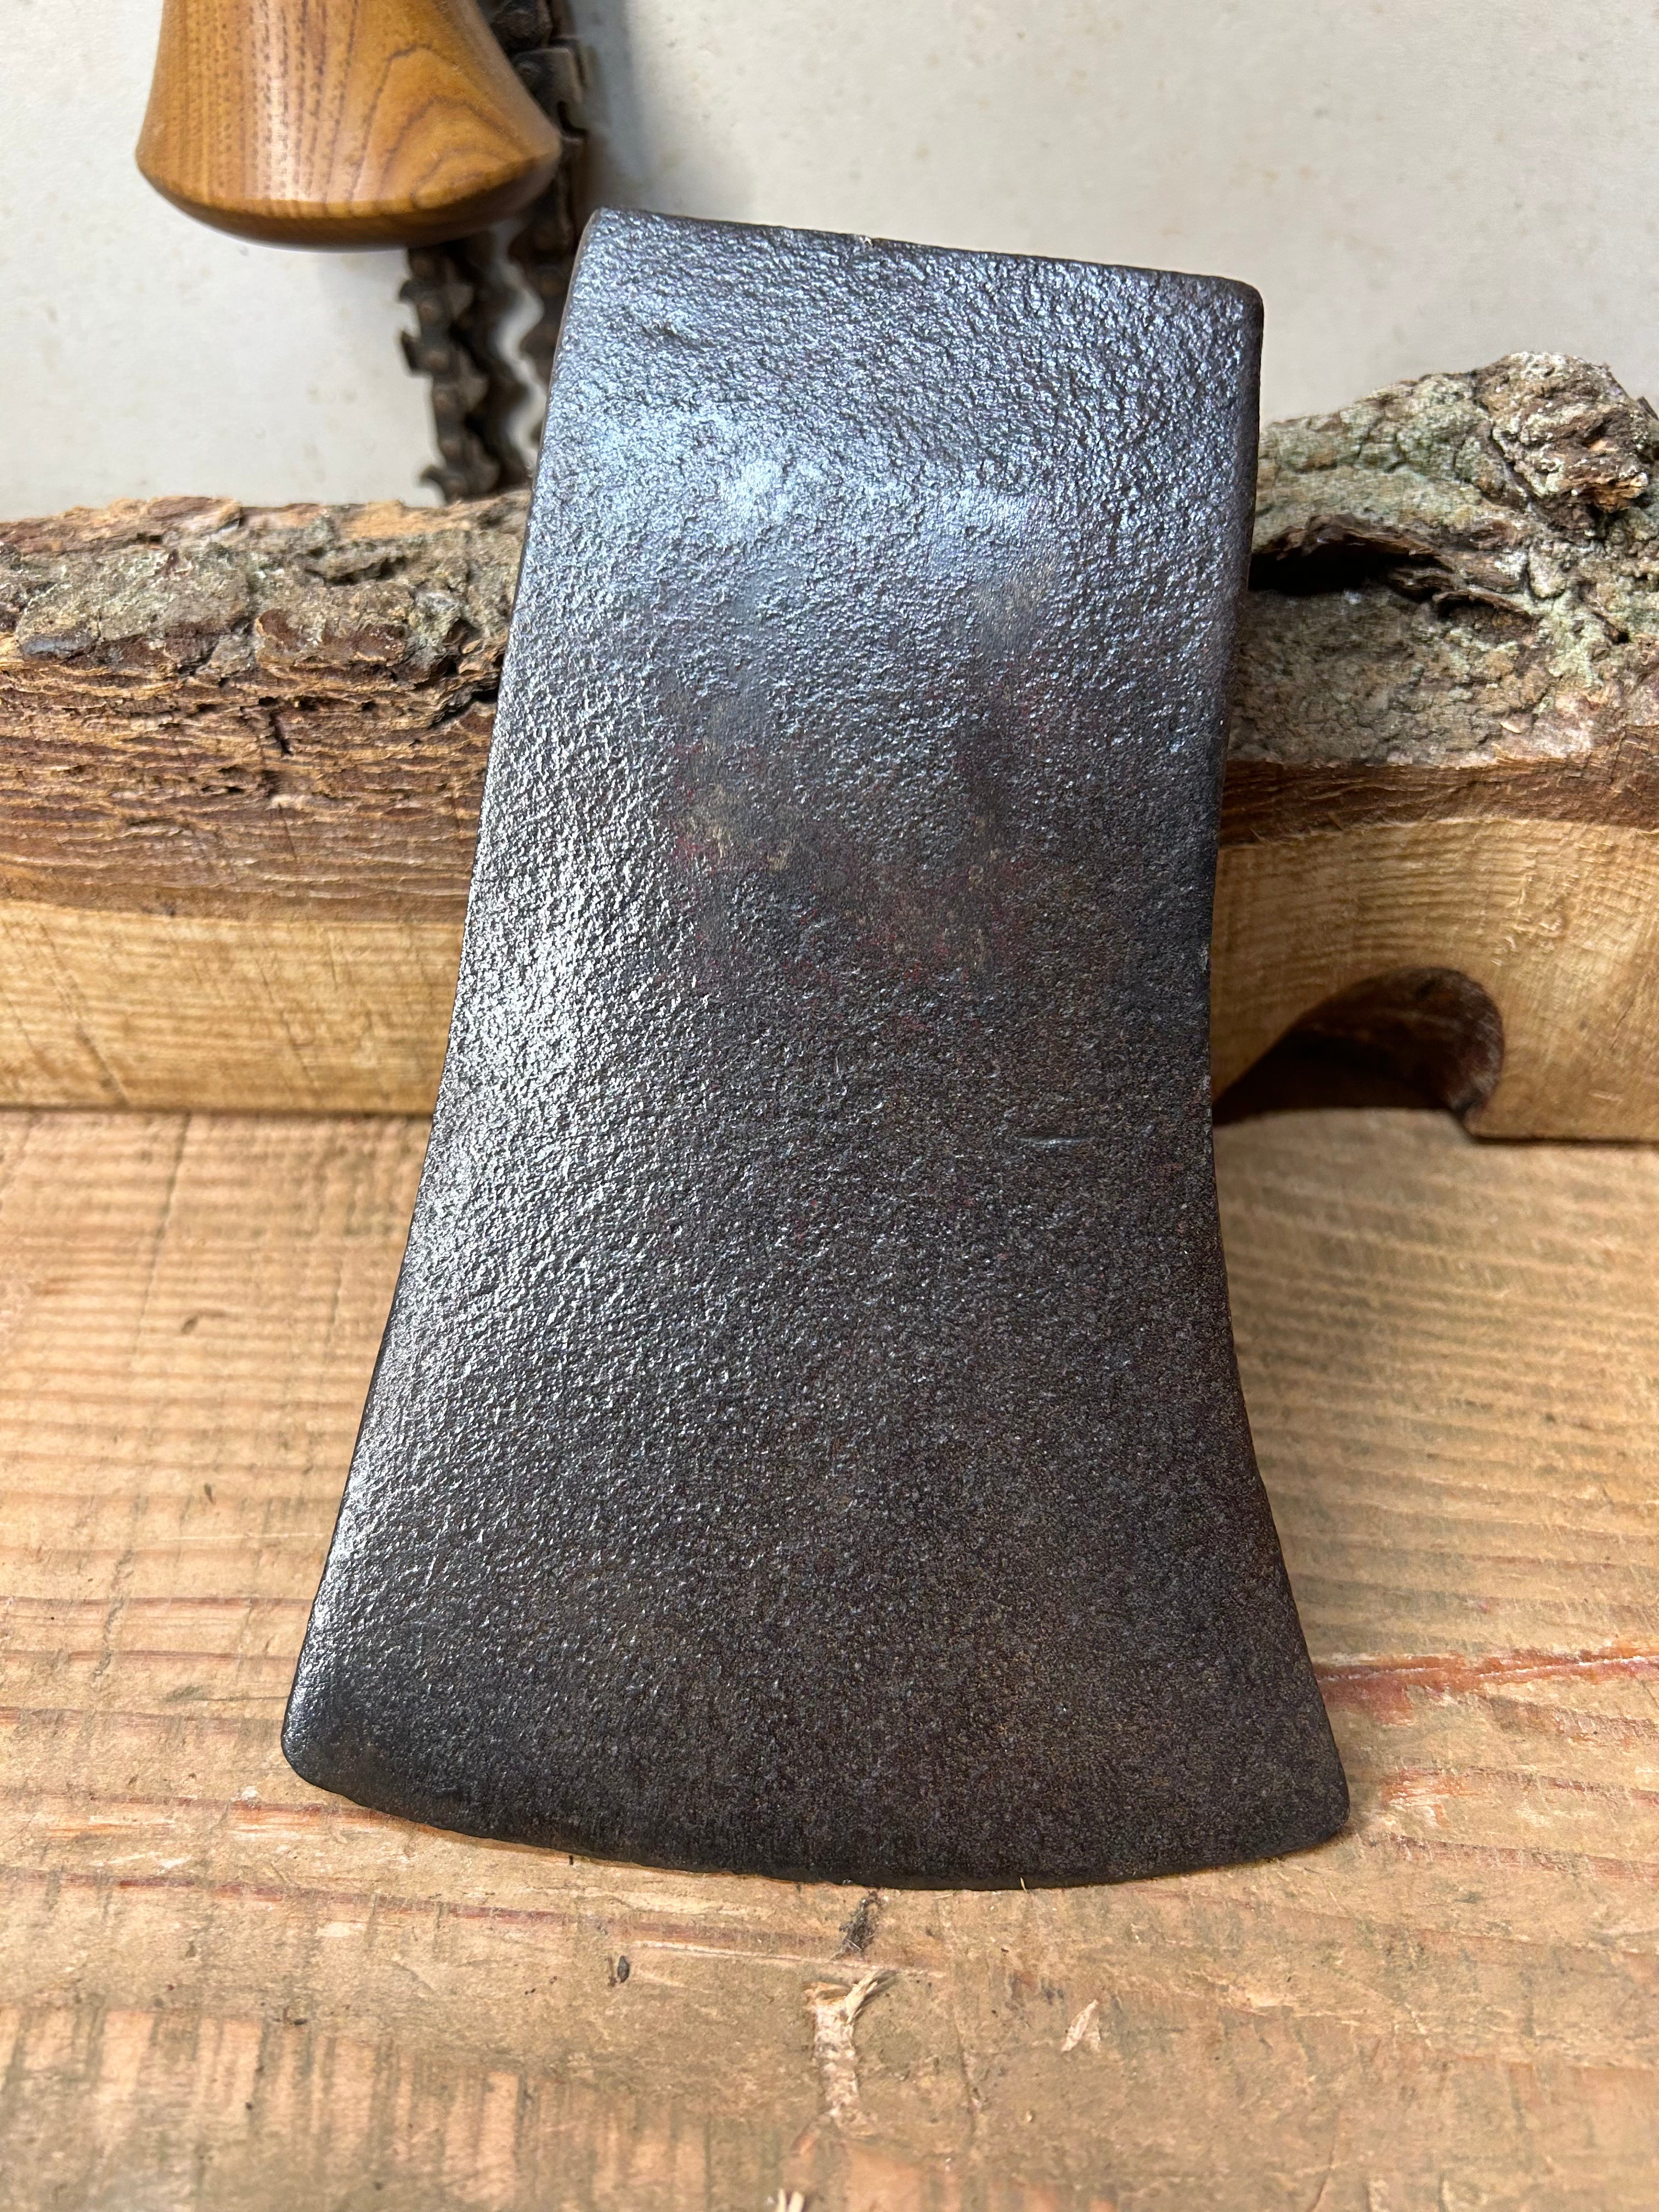 Vintage Kelly Woodslasher 3.5lb Dayton pattern axe head